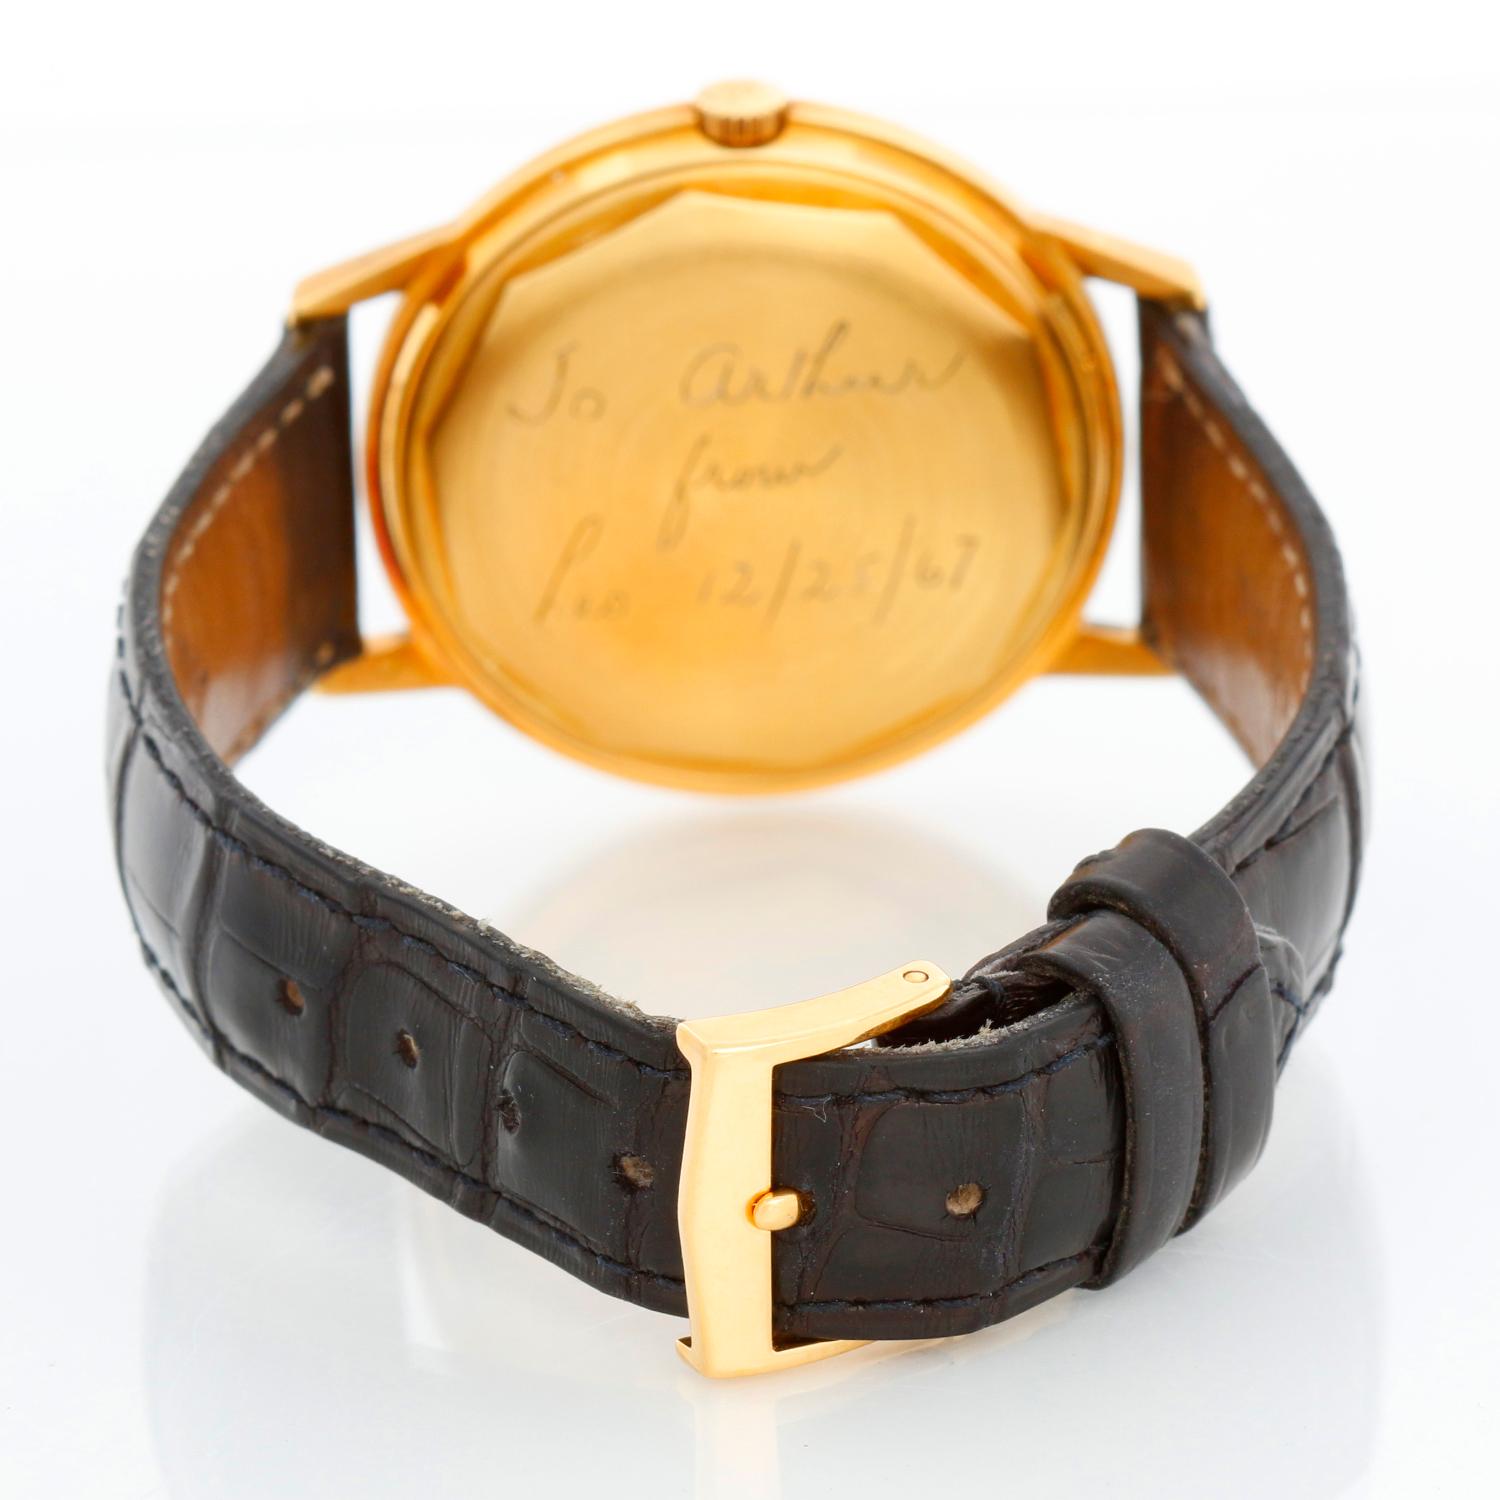 Rare & Collectable Patek Philippe Calatrava 18k Yellow Gold Men's Watch 3542 1